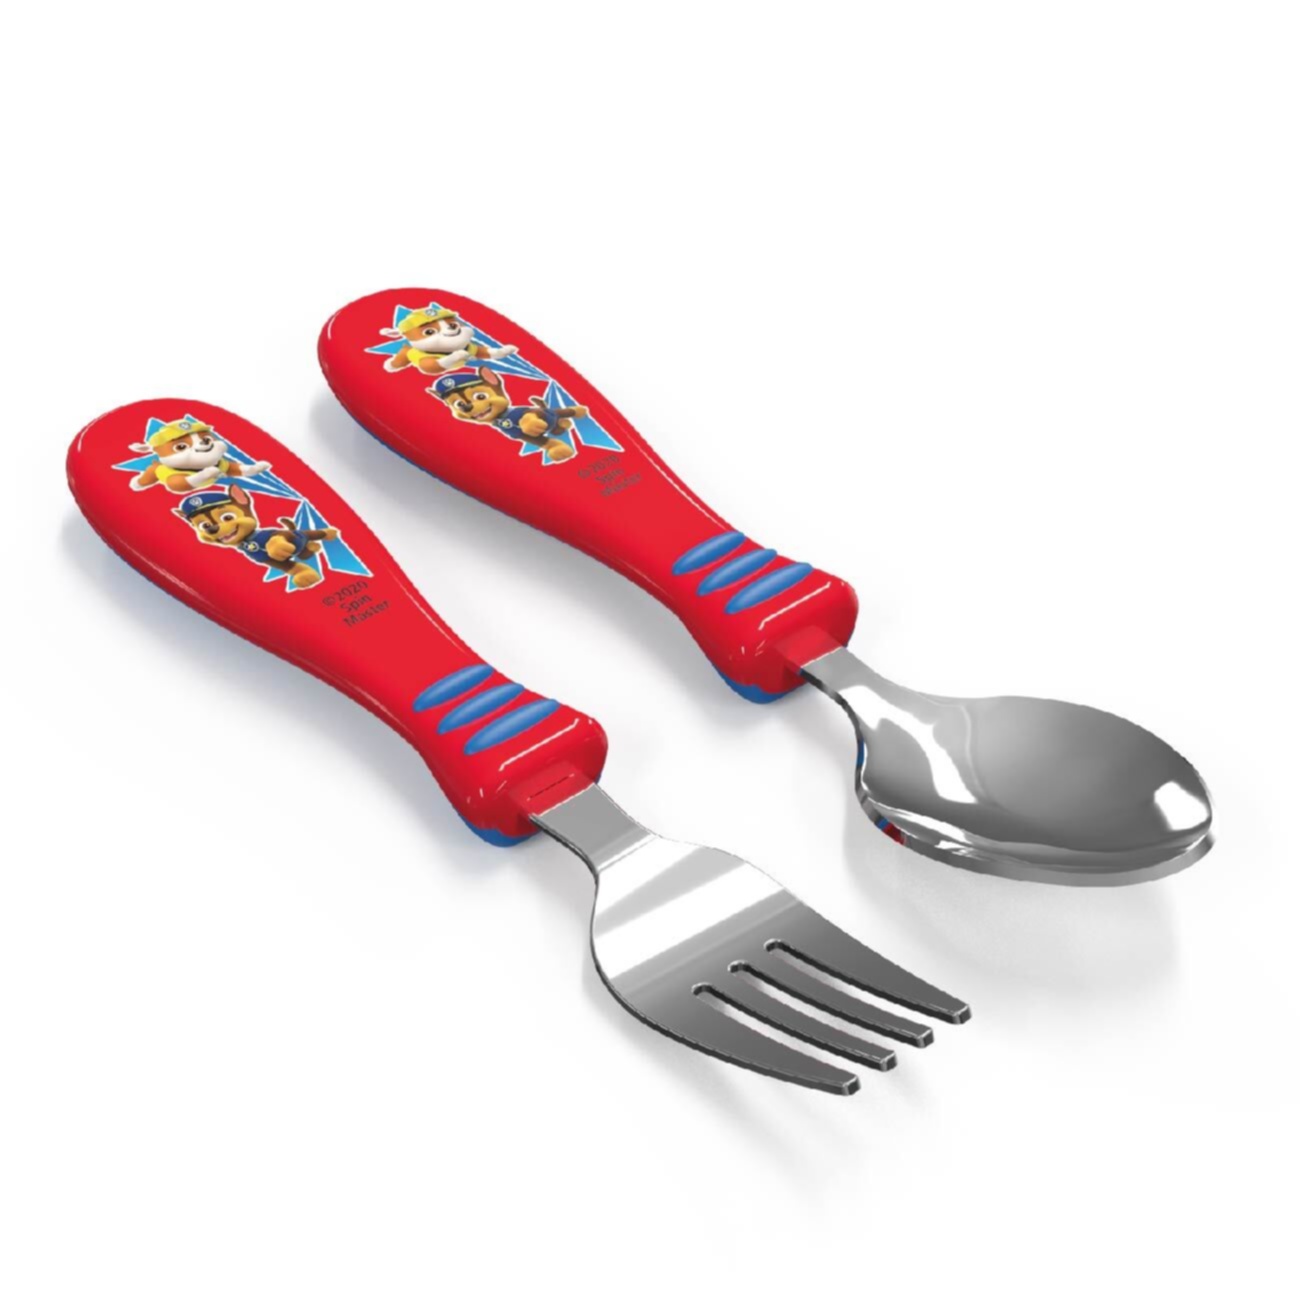 BPA-free Zak Children's Spoon and Fork Olaf Frozen Designs Easy Grip Flatware 